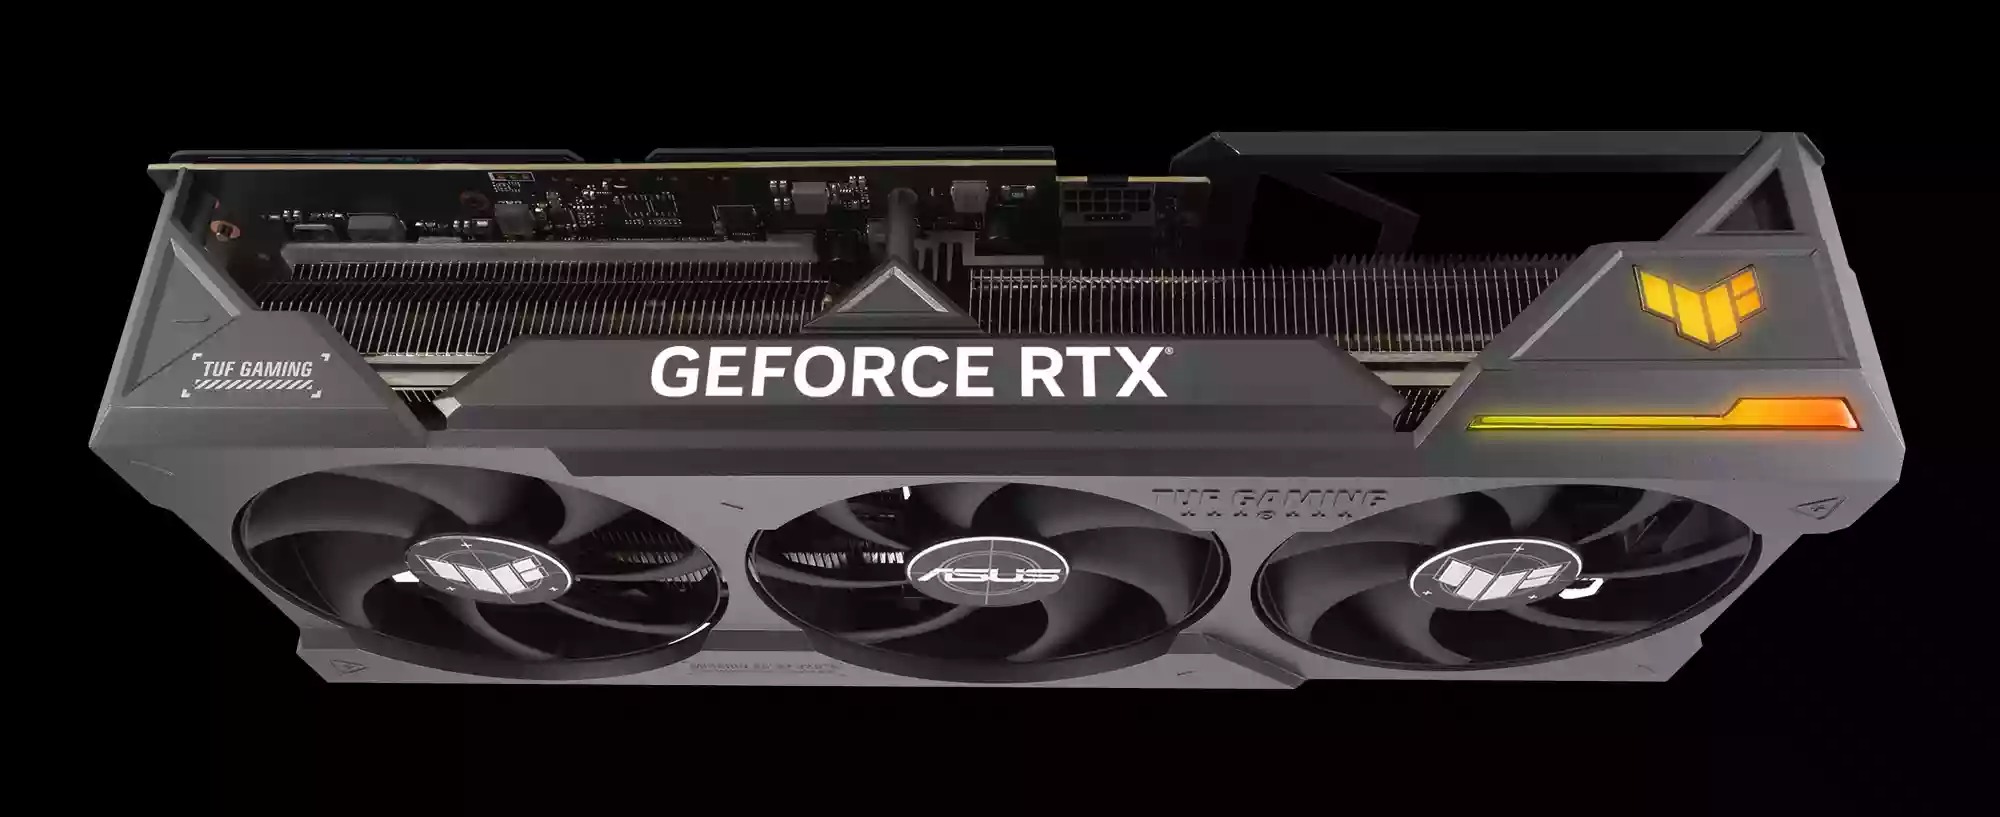 asus tuf rtx4090 1 ASUS เปิดตัวการ์ดจอ ROG Strix GeForce RTX 4090/4080 และ TUF Gaming GeForce RTX 4090/4080 รุ่นใหม่ล่าสุดอย่างเป็นทางการ 